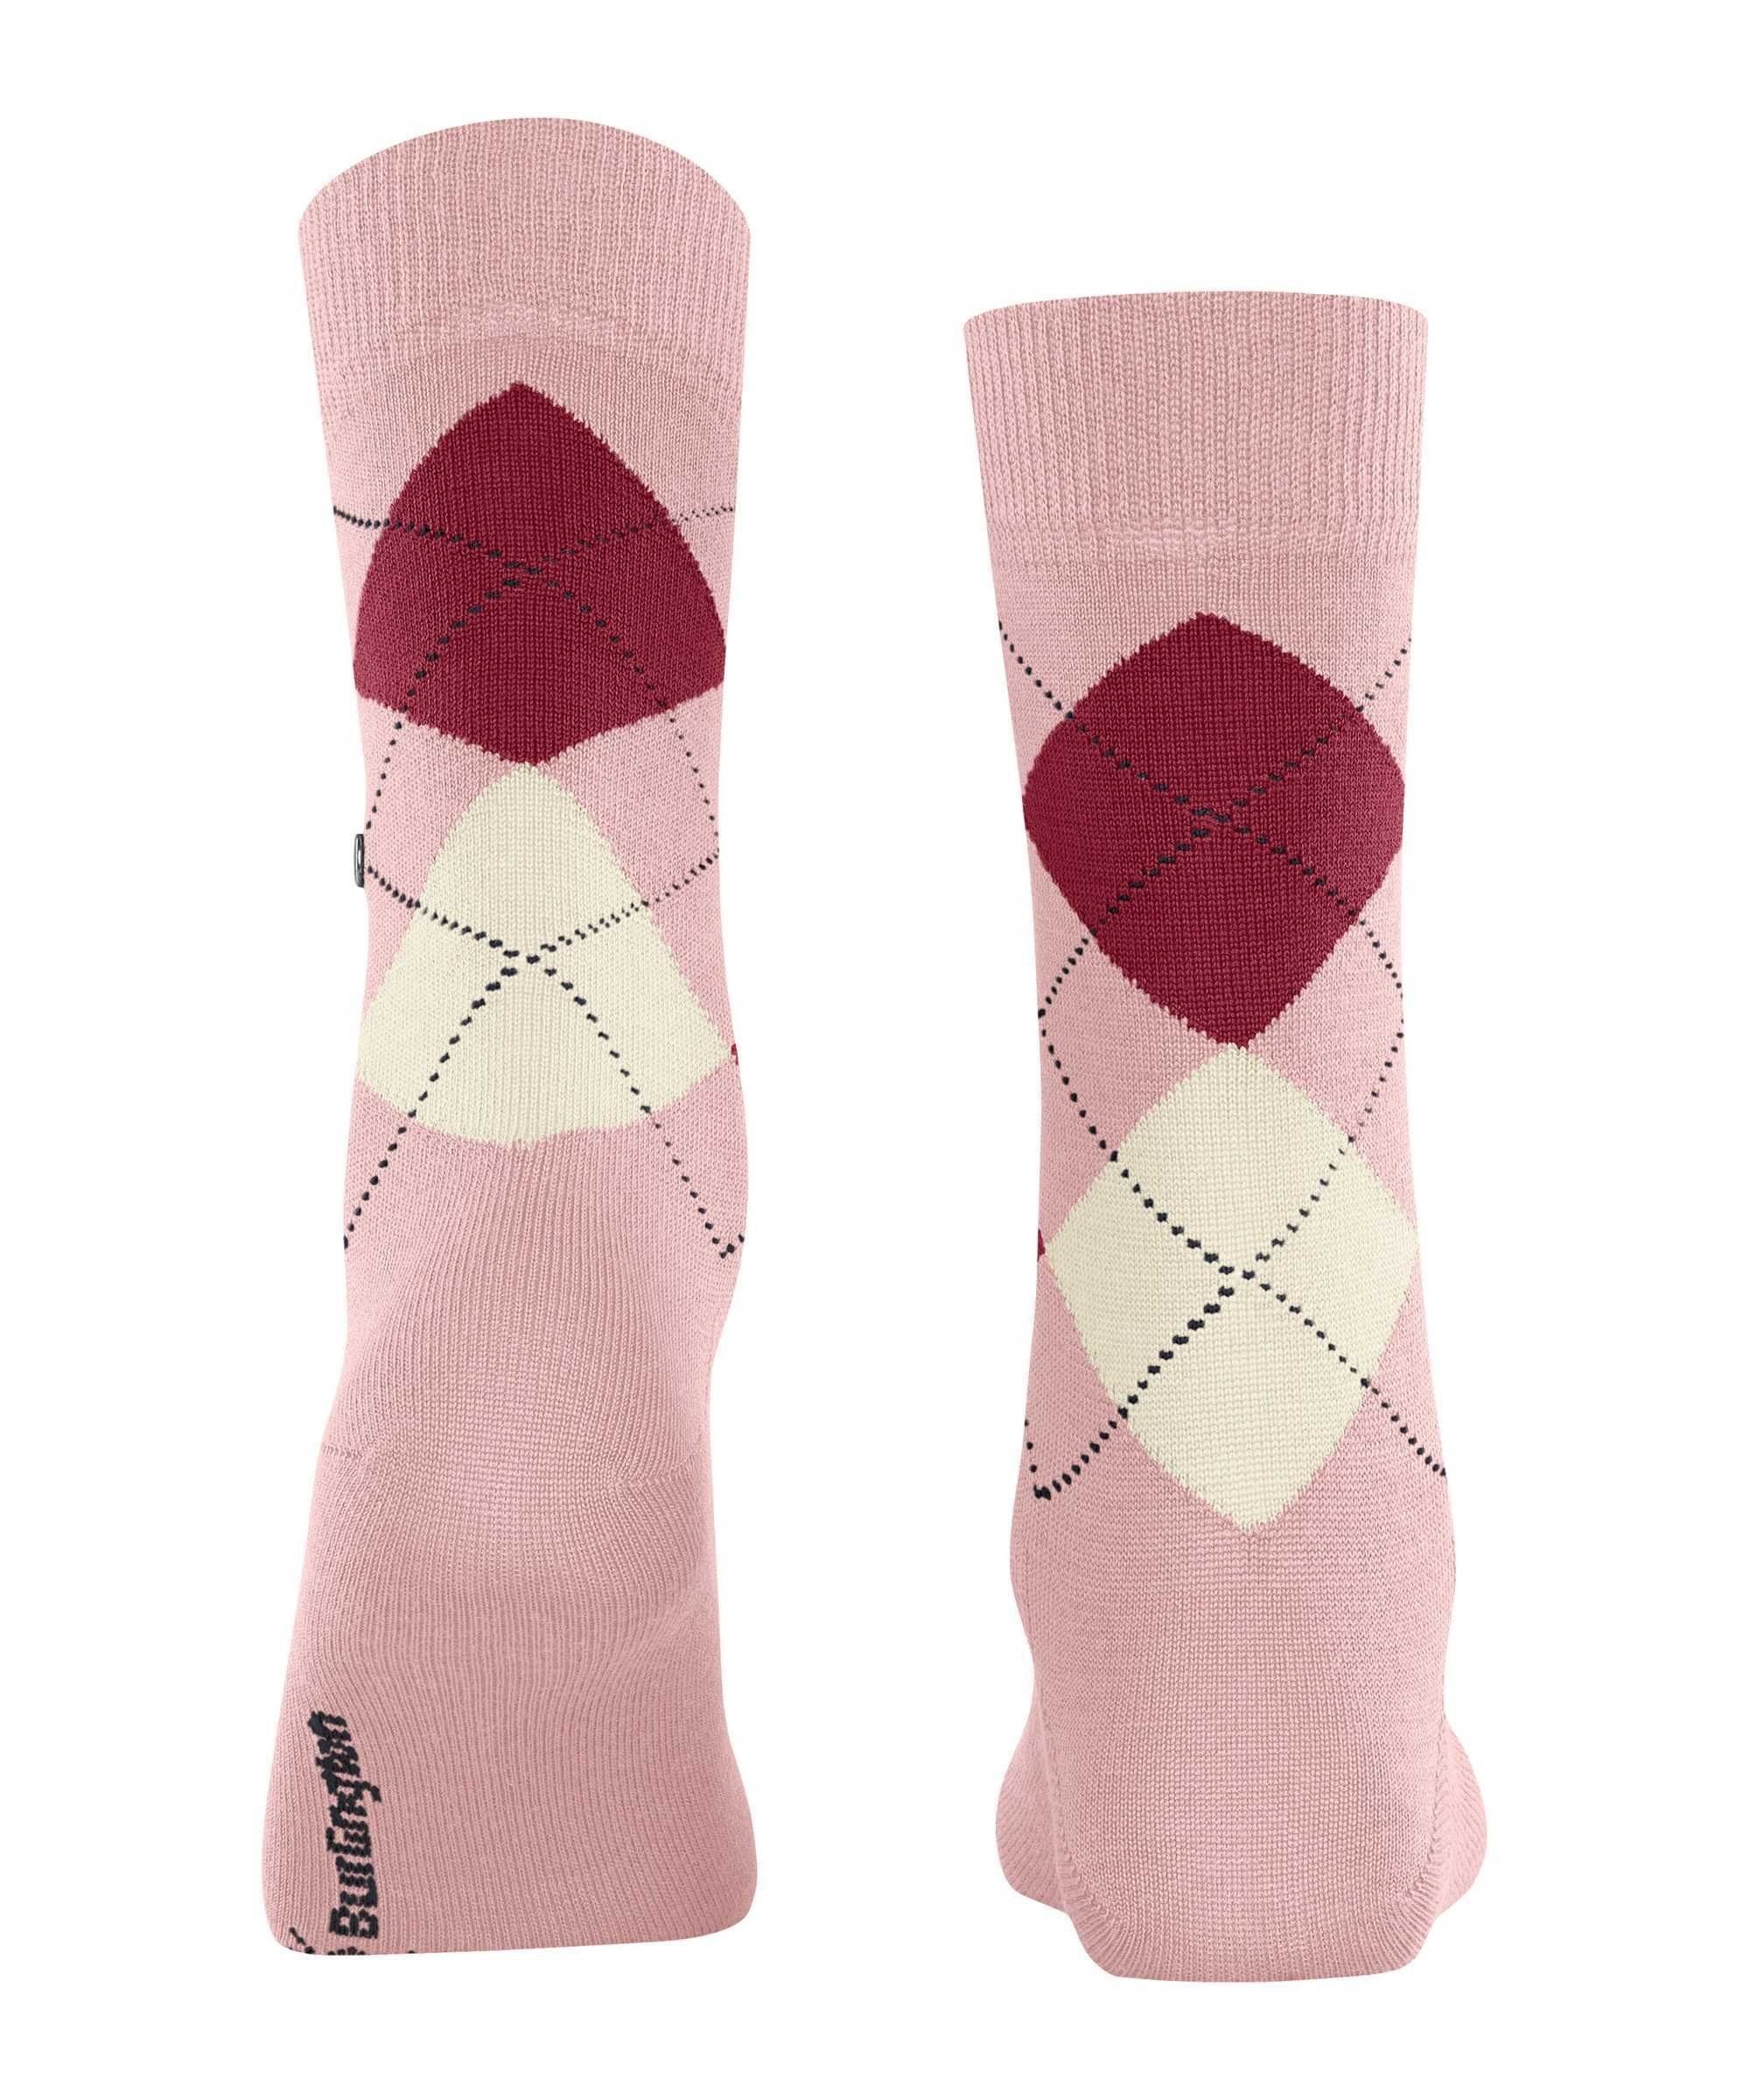 Burlington Kurzsocken Rosa/Rot/Weiß Damen Socken Kurzstrumpf - MARYLEBONE